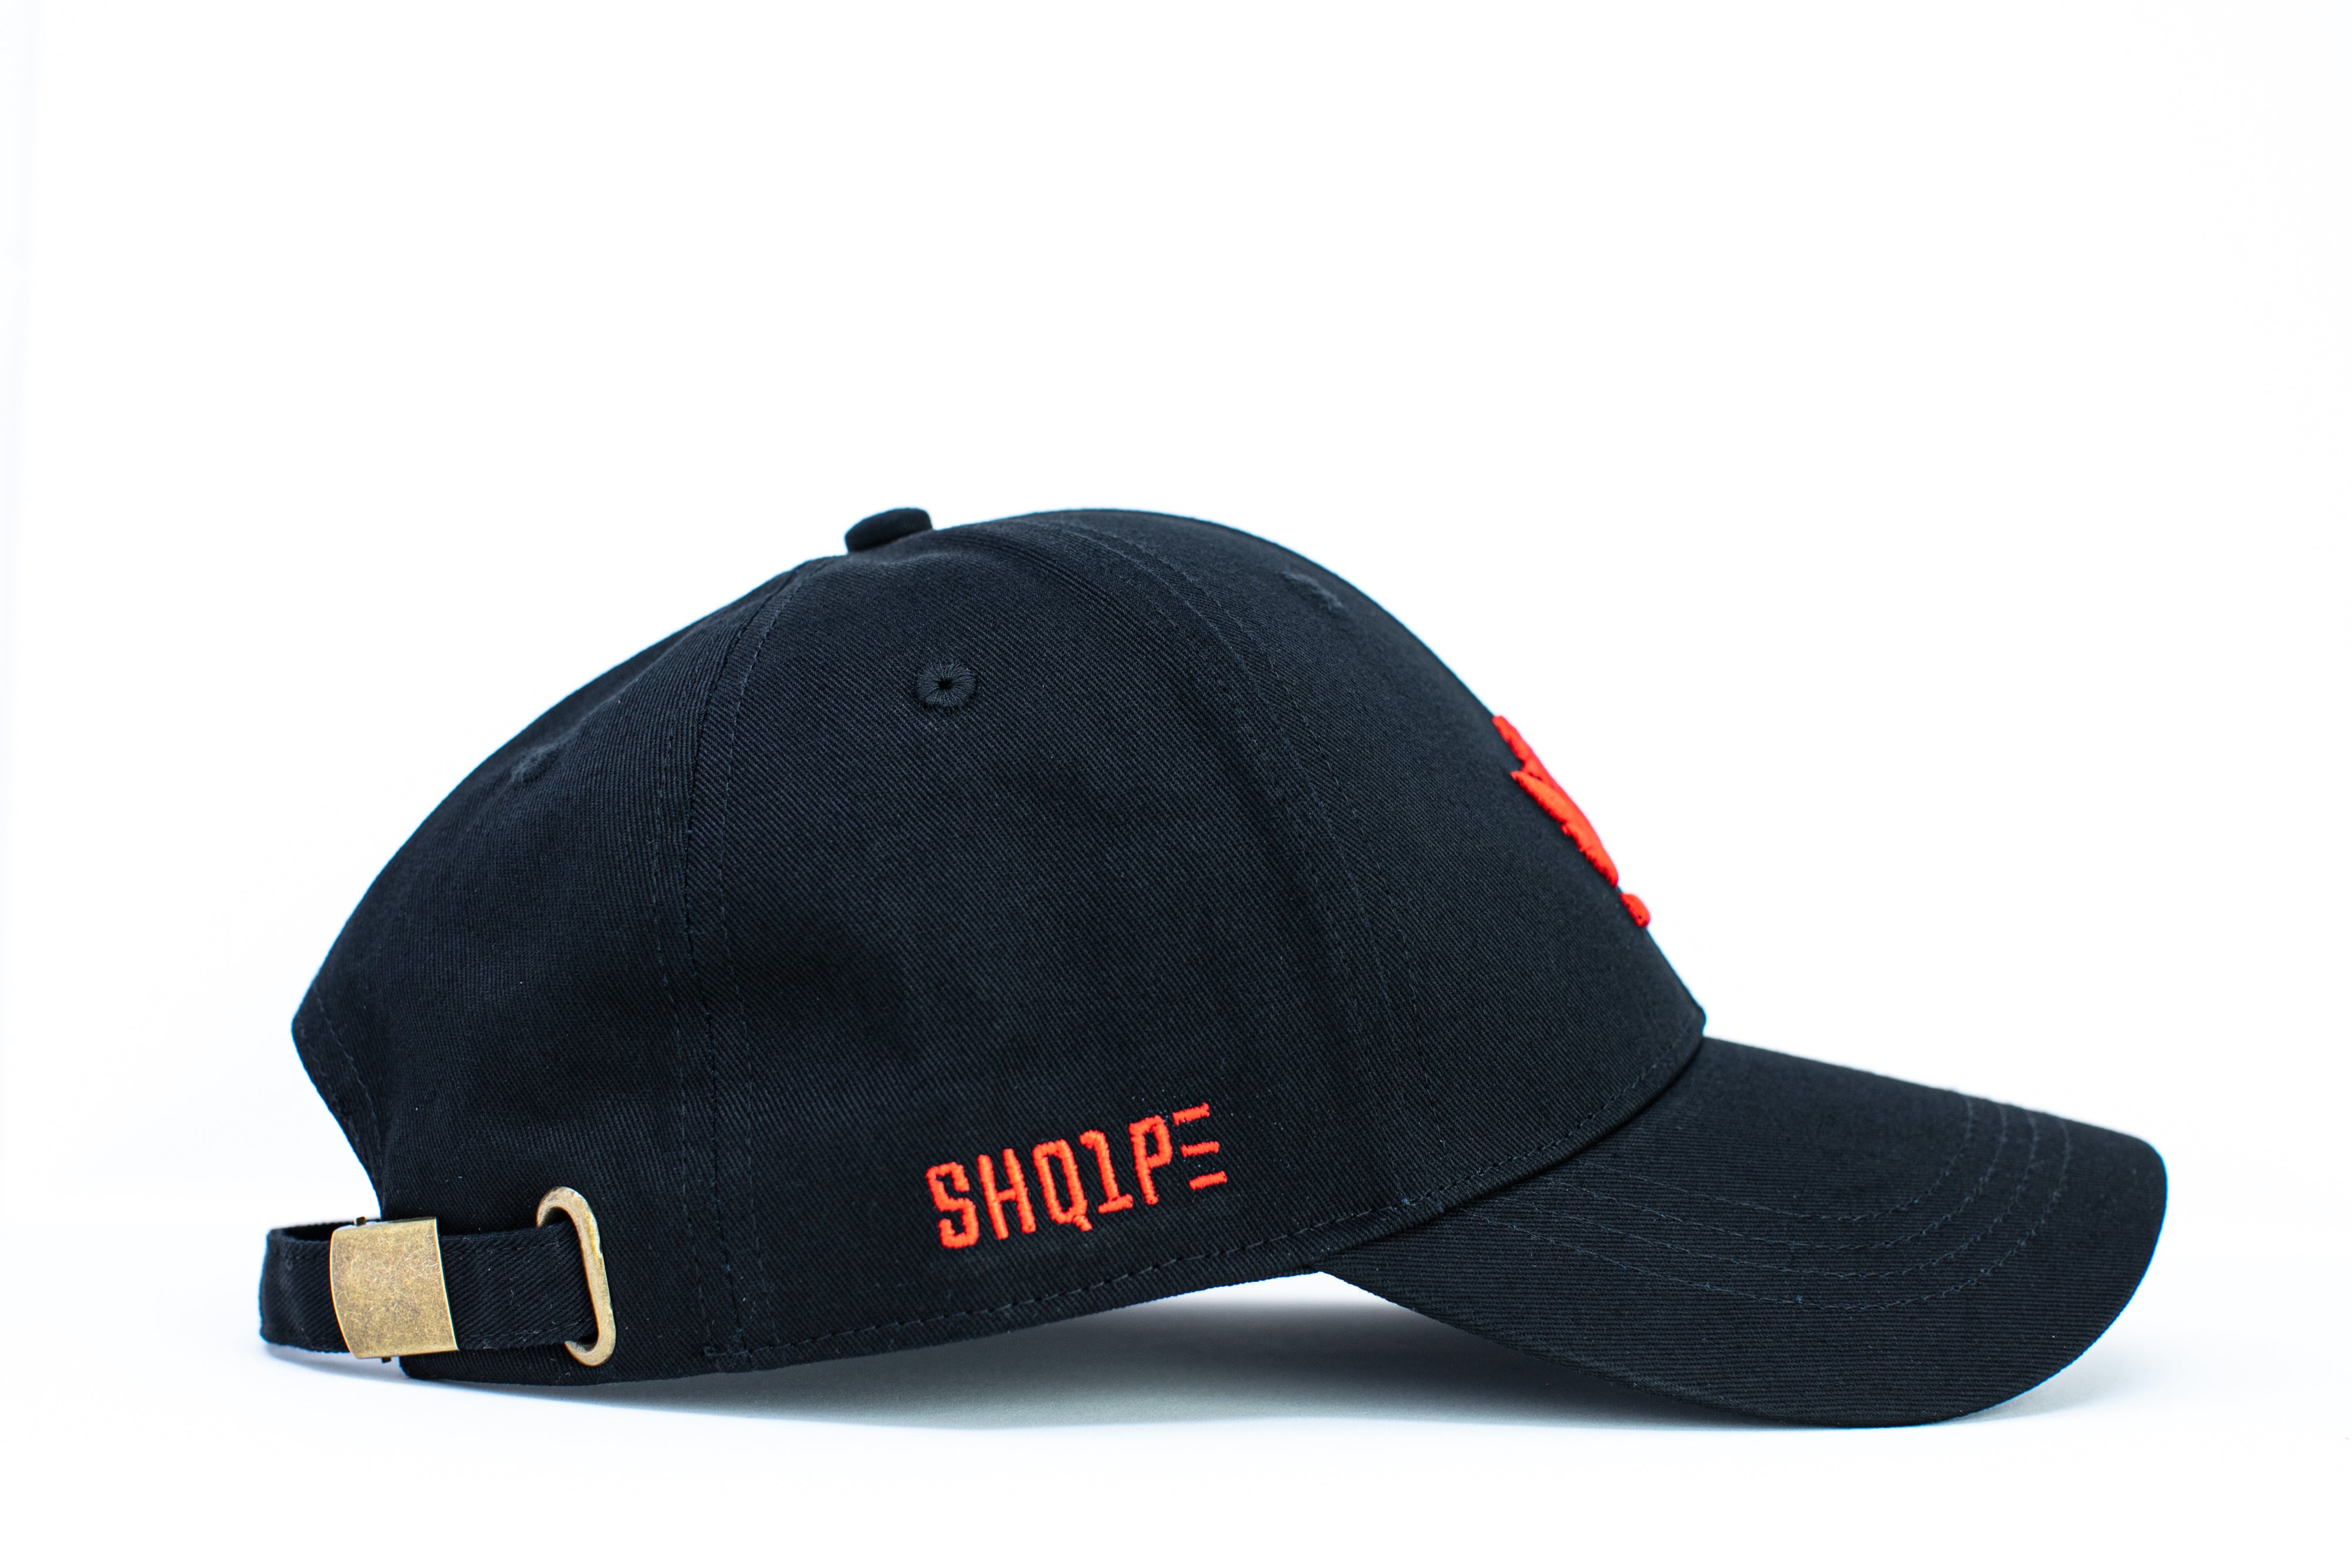 1st Edition Shq1pe Baseball Cap Black/Red